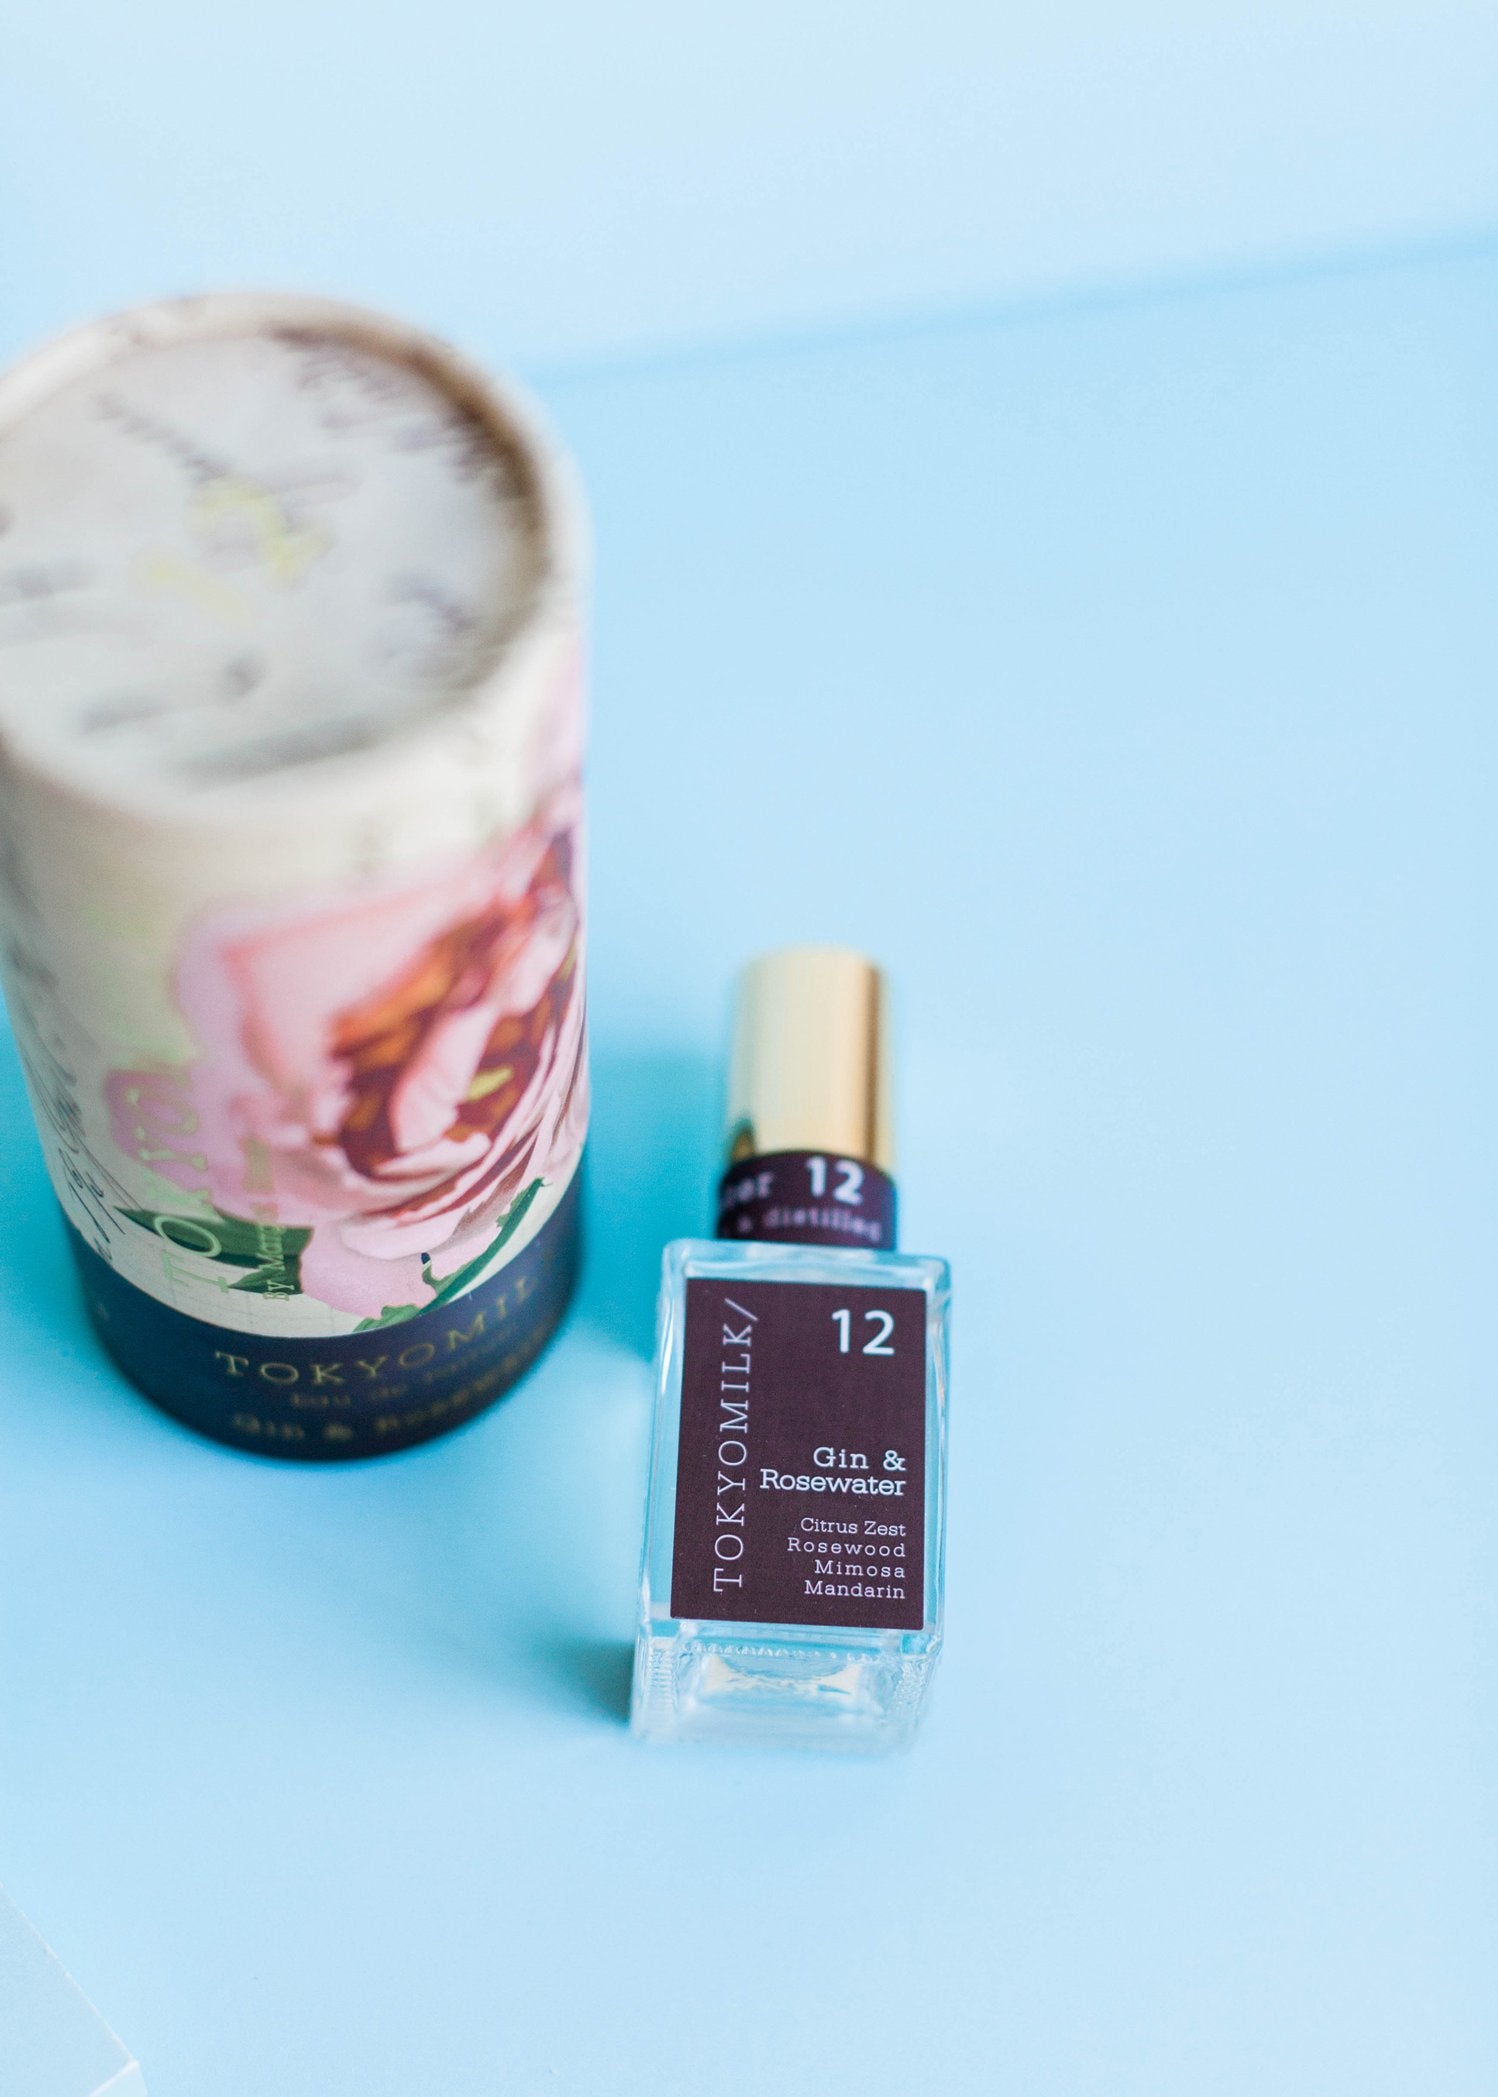 Tokyo Milk - Gin and Rosewater Eau de Parfum